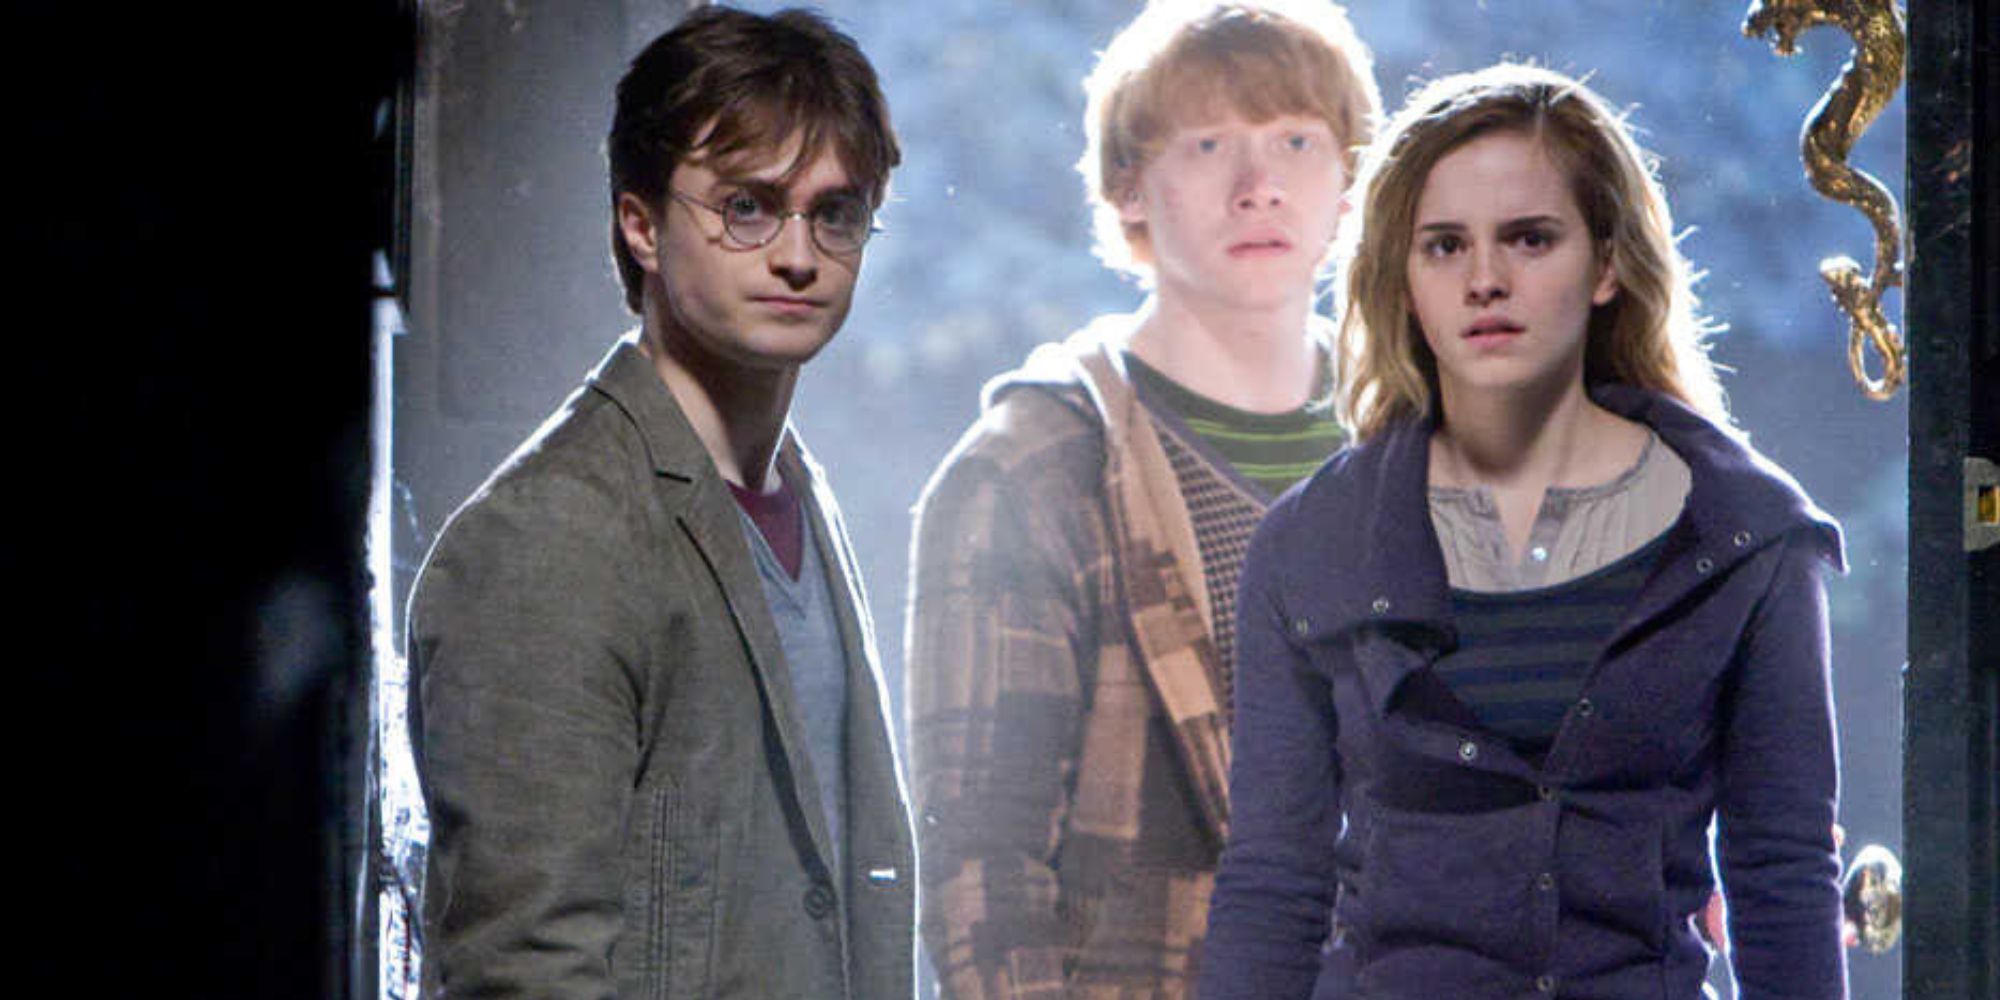 David Zaslav Touts JK Rowling Involvement in Harry Potter Series